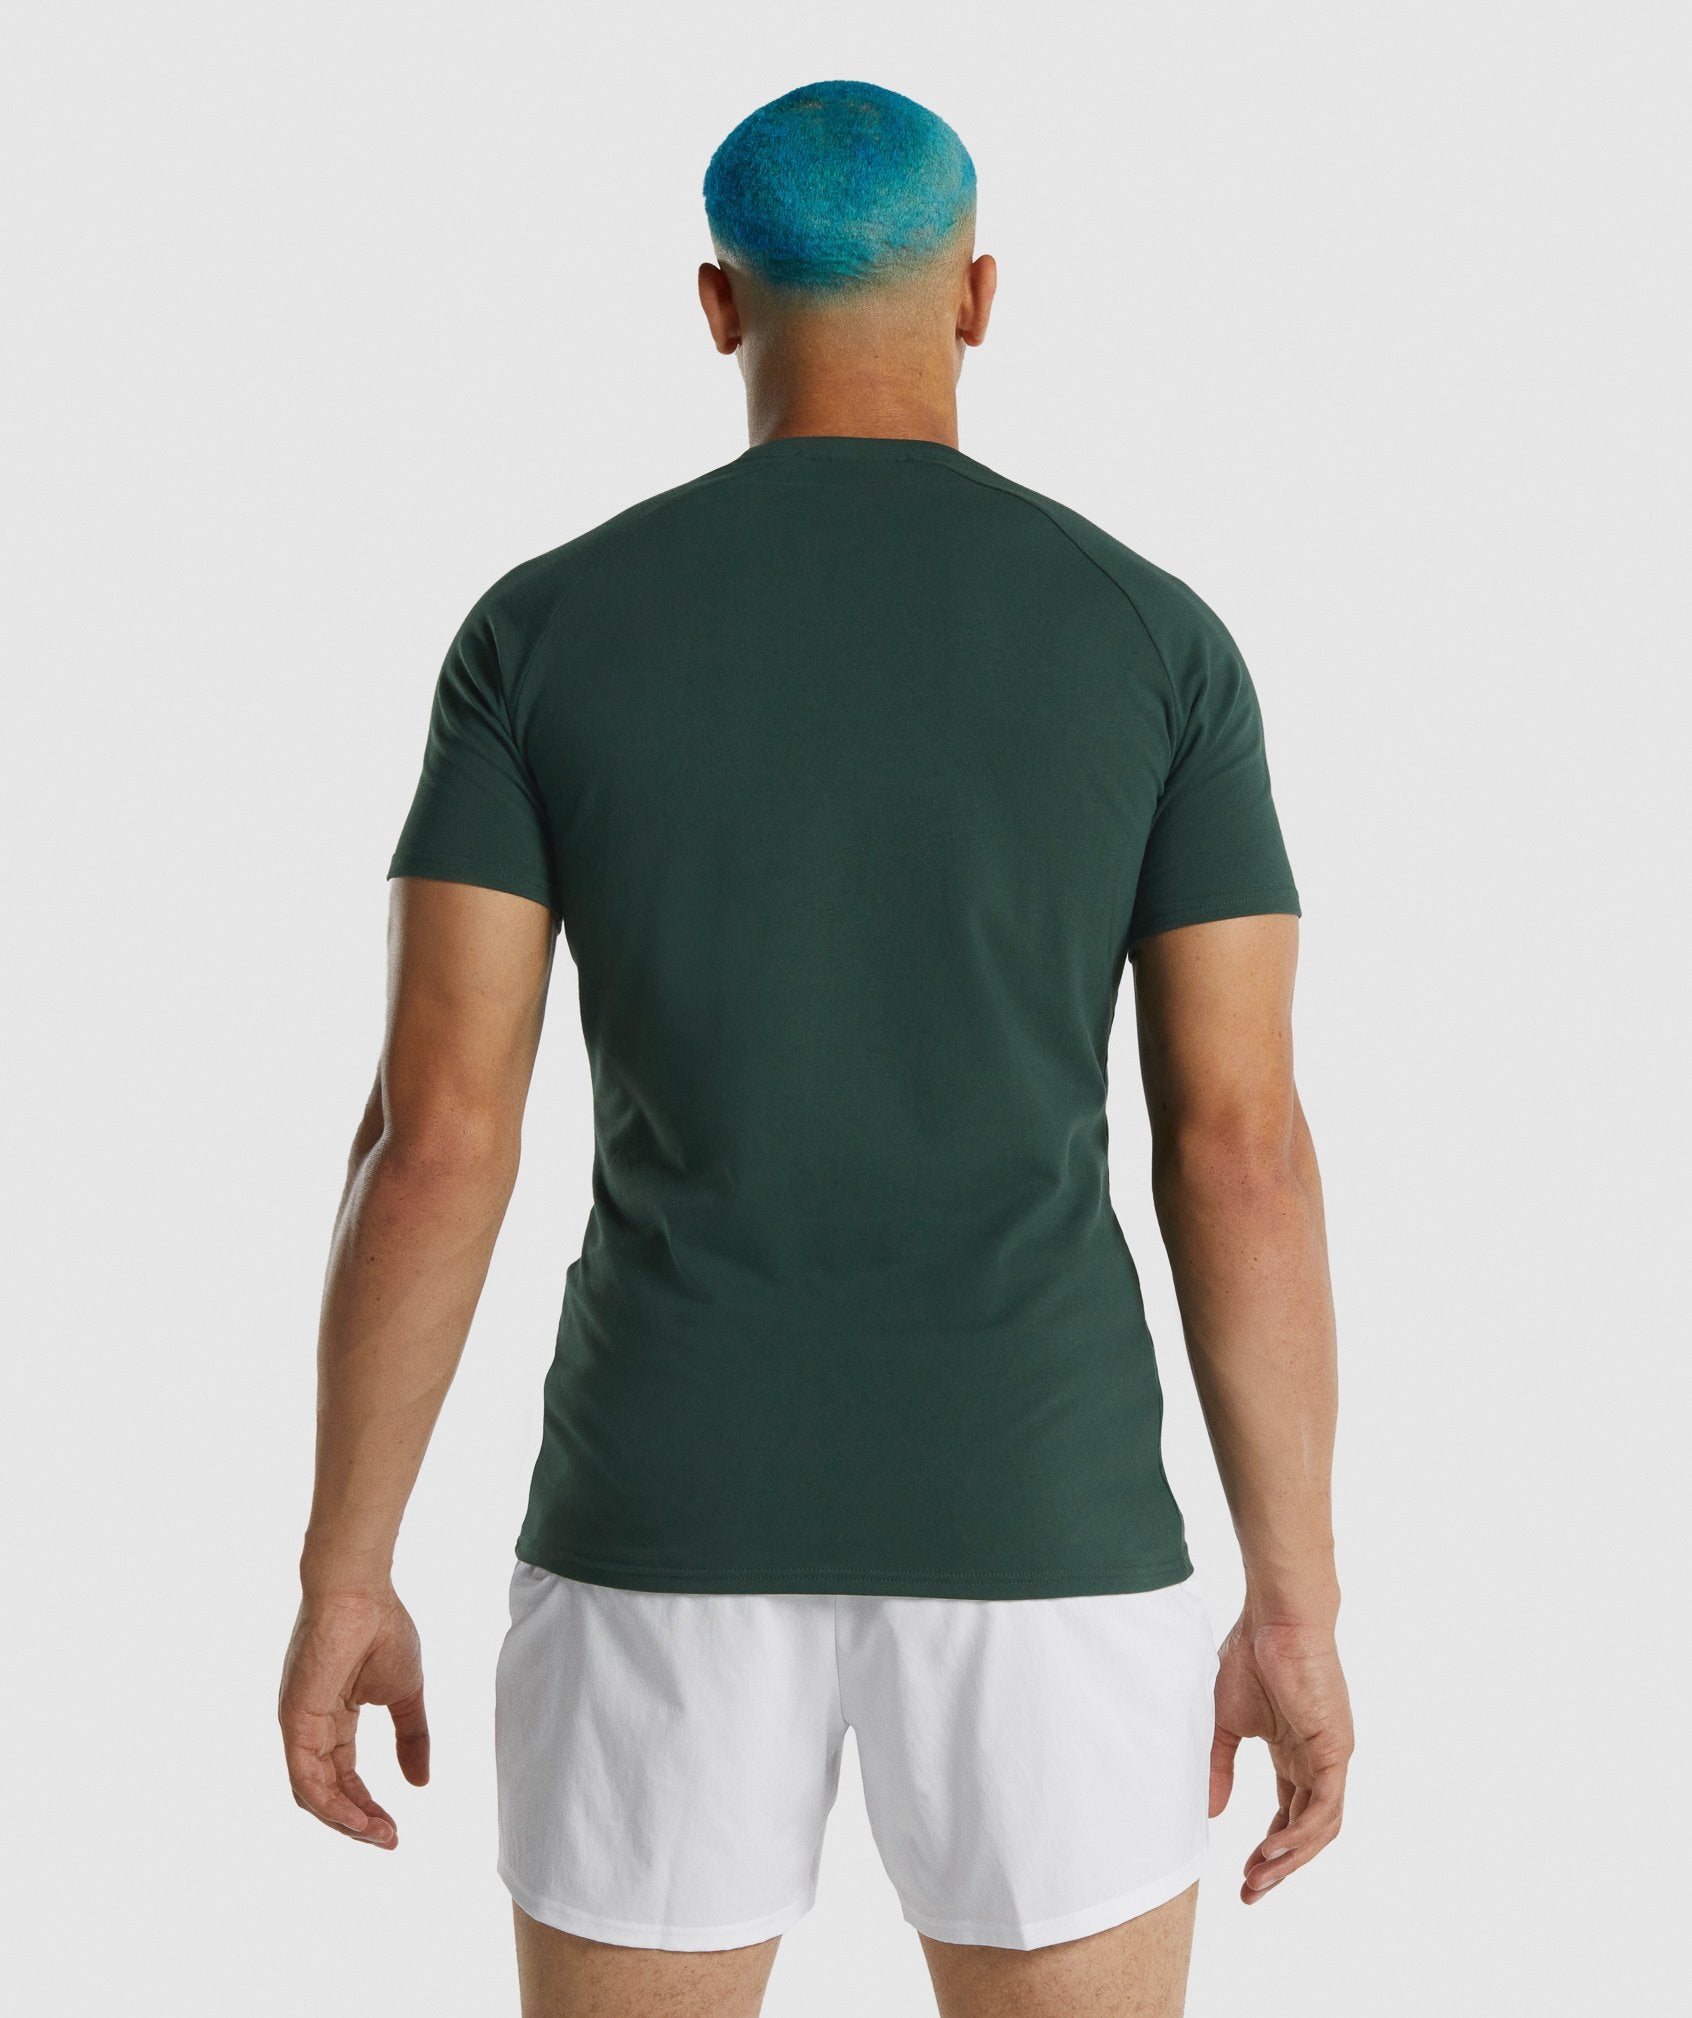 Apollo T-Shirt in Dark Green